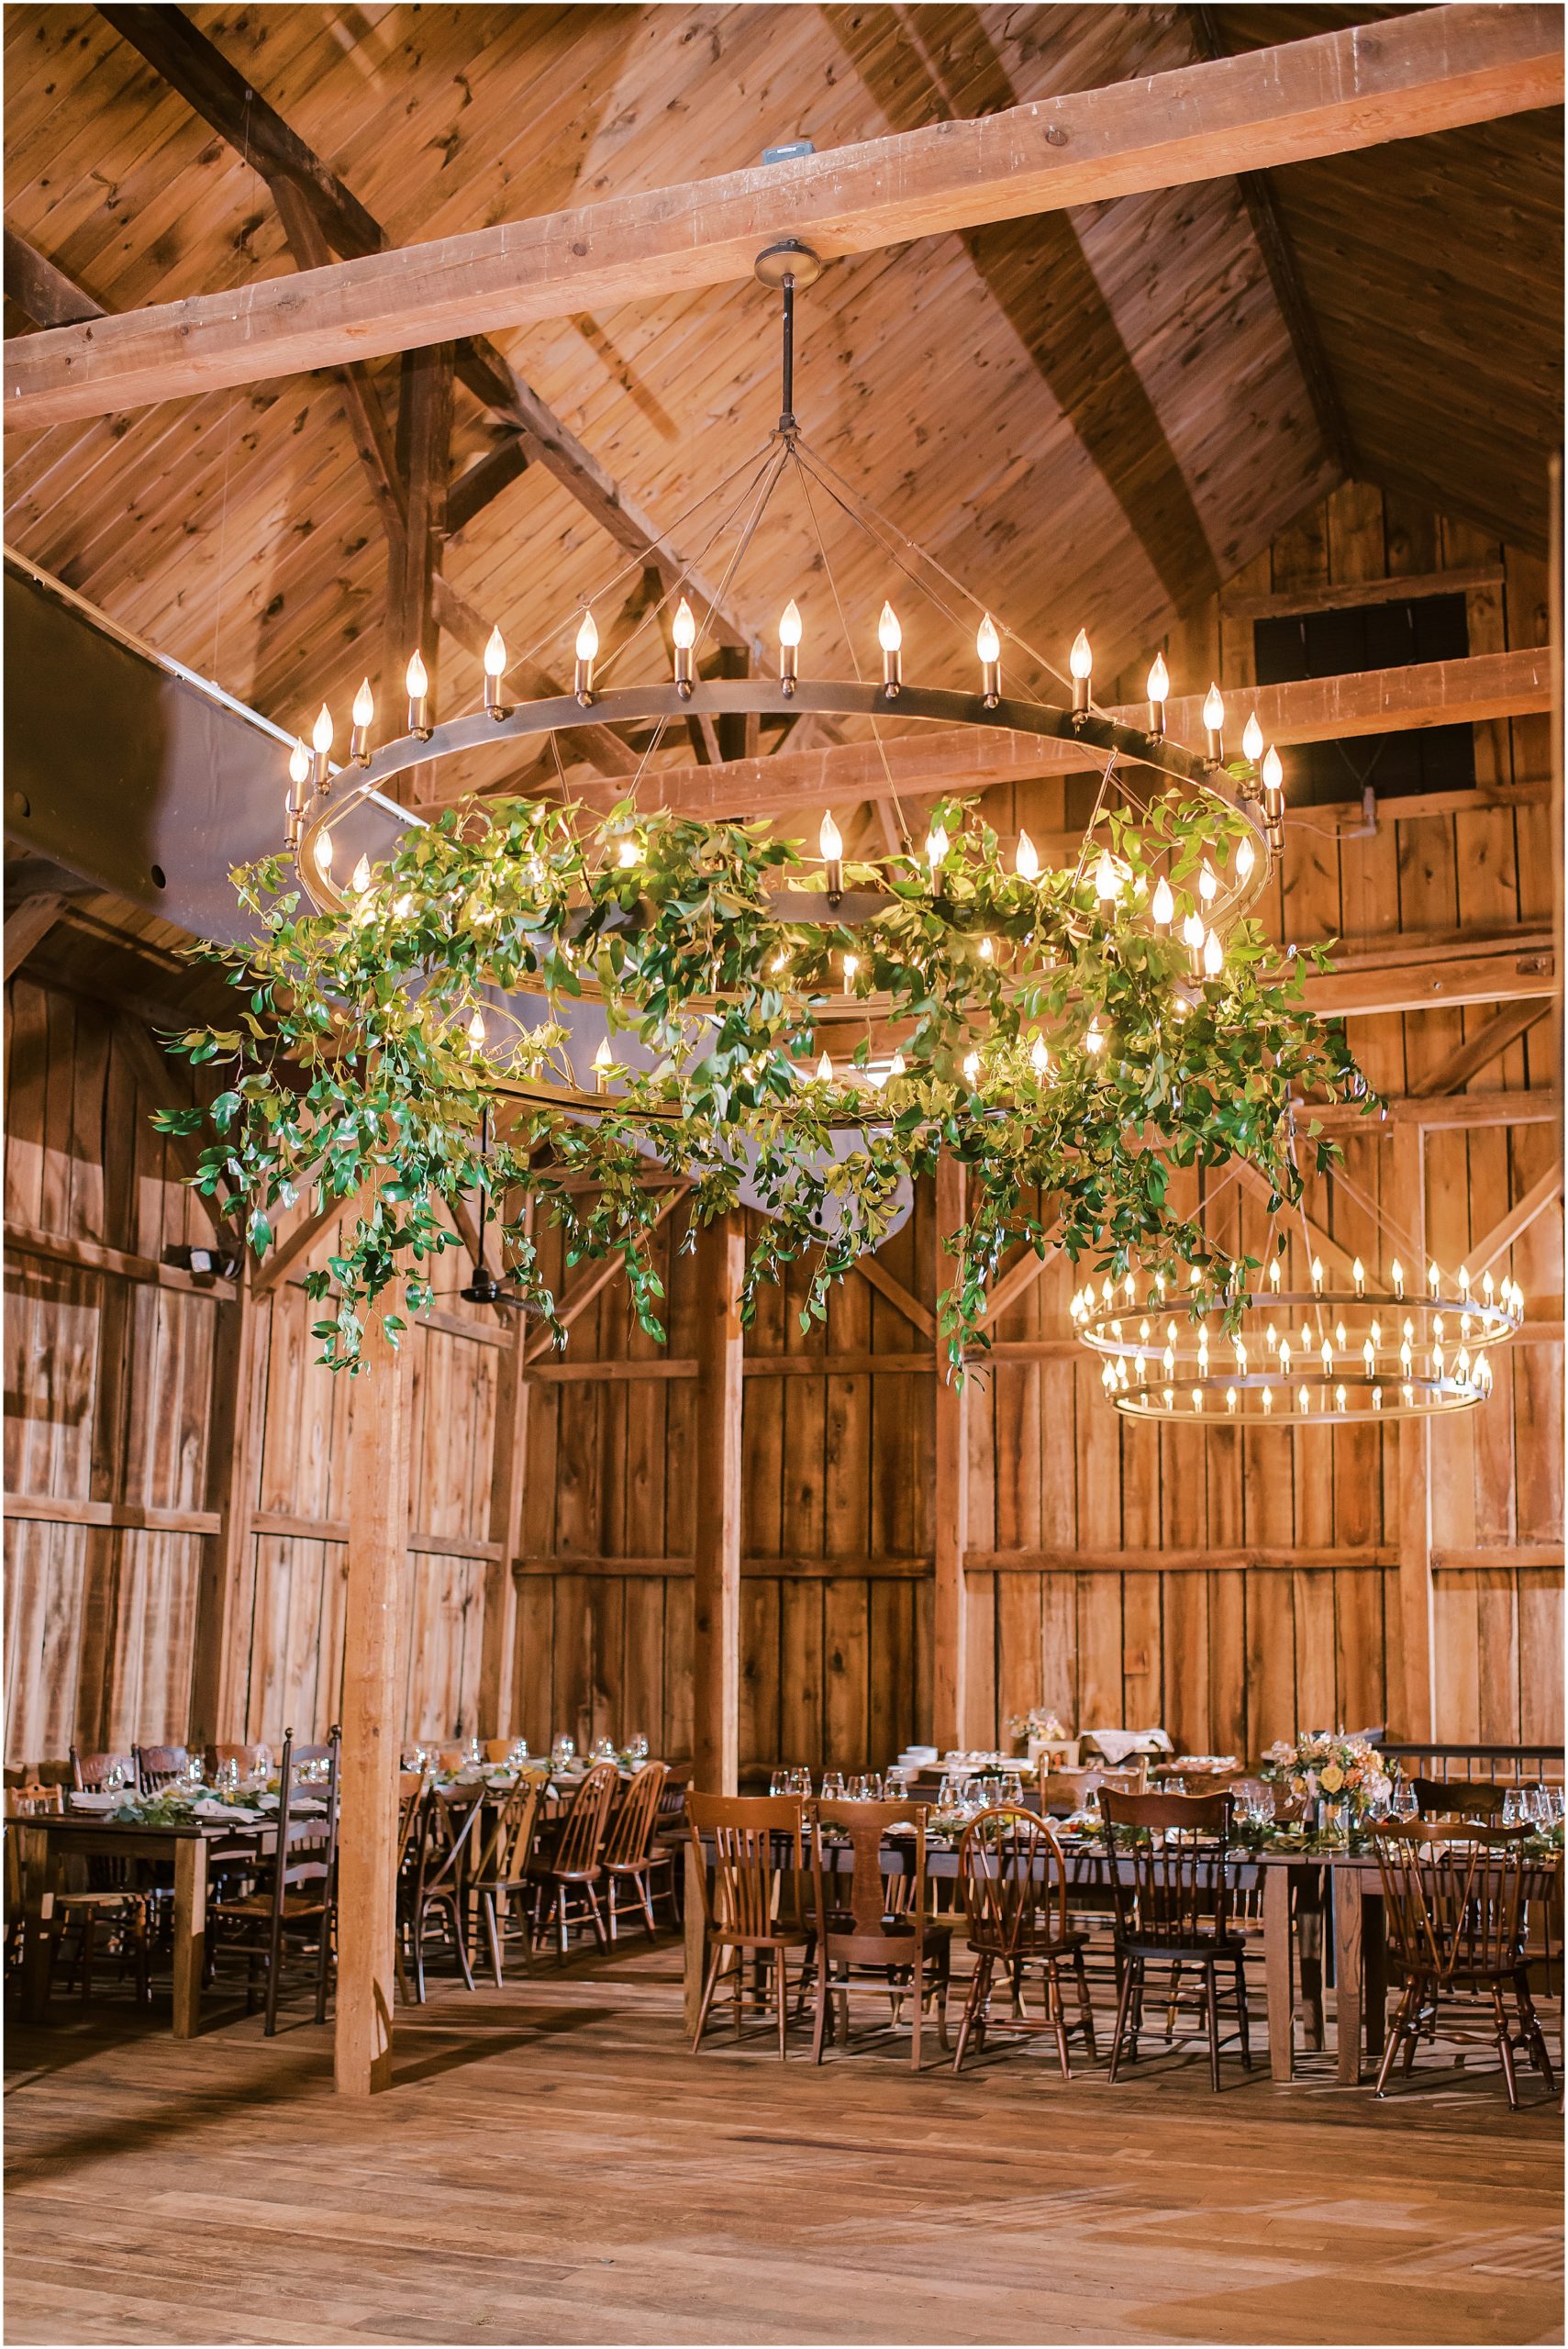 Winter market themed wedding reception in Tranquility Farm barn